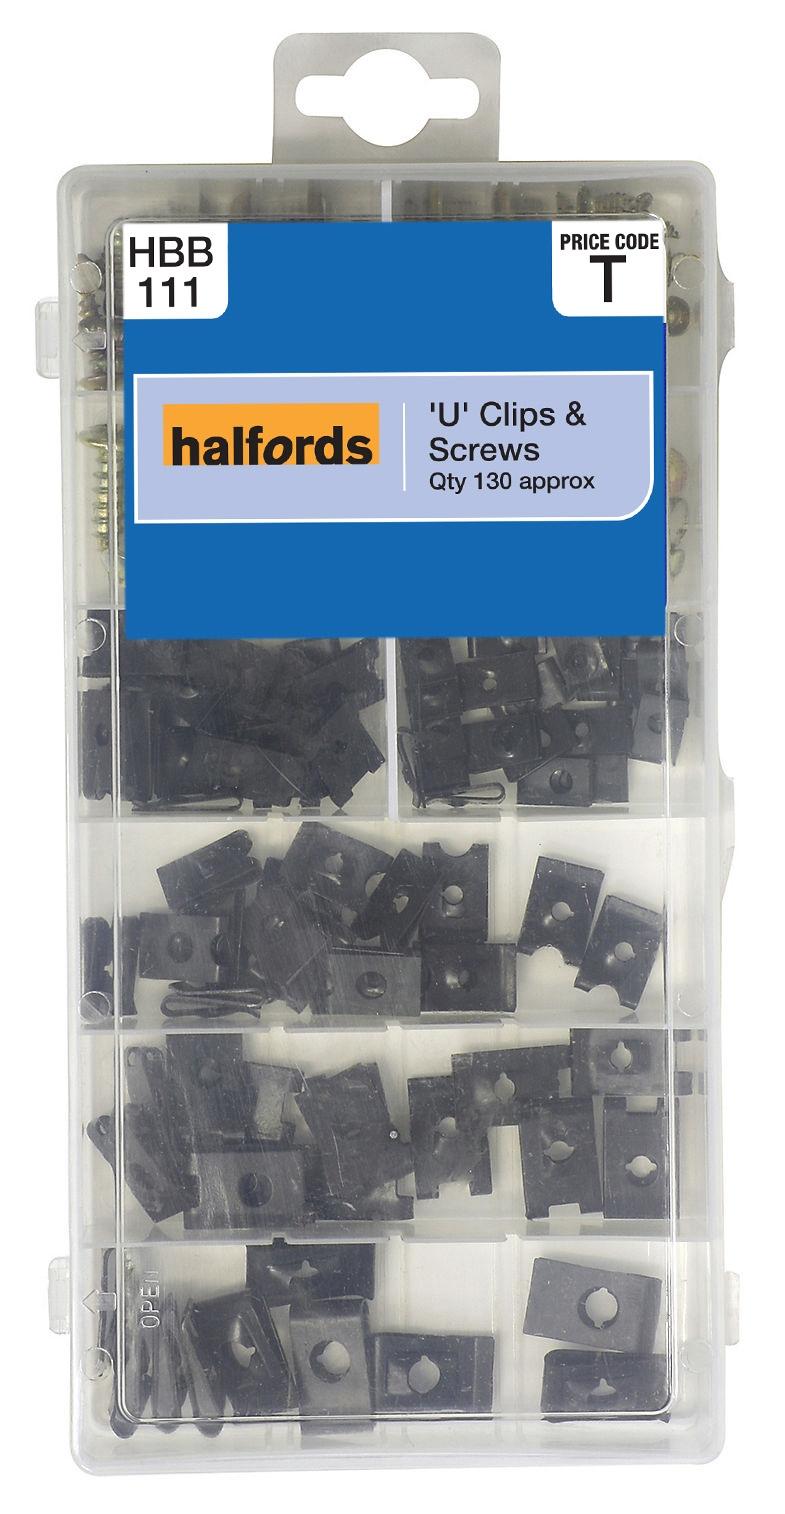 Halfords Assorted U Clips & Screws